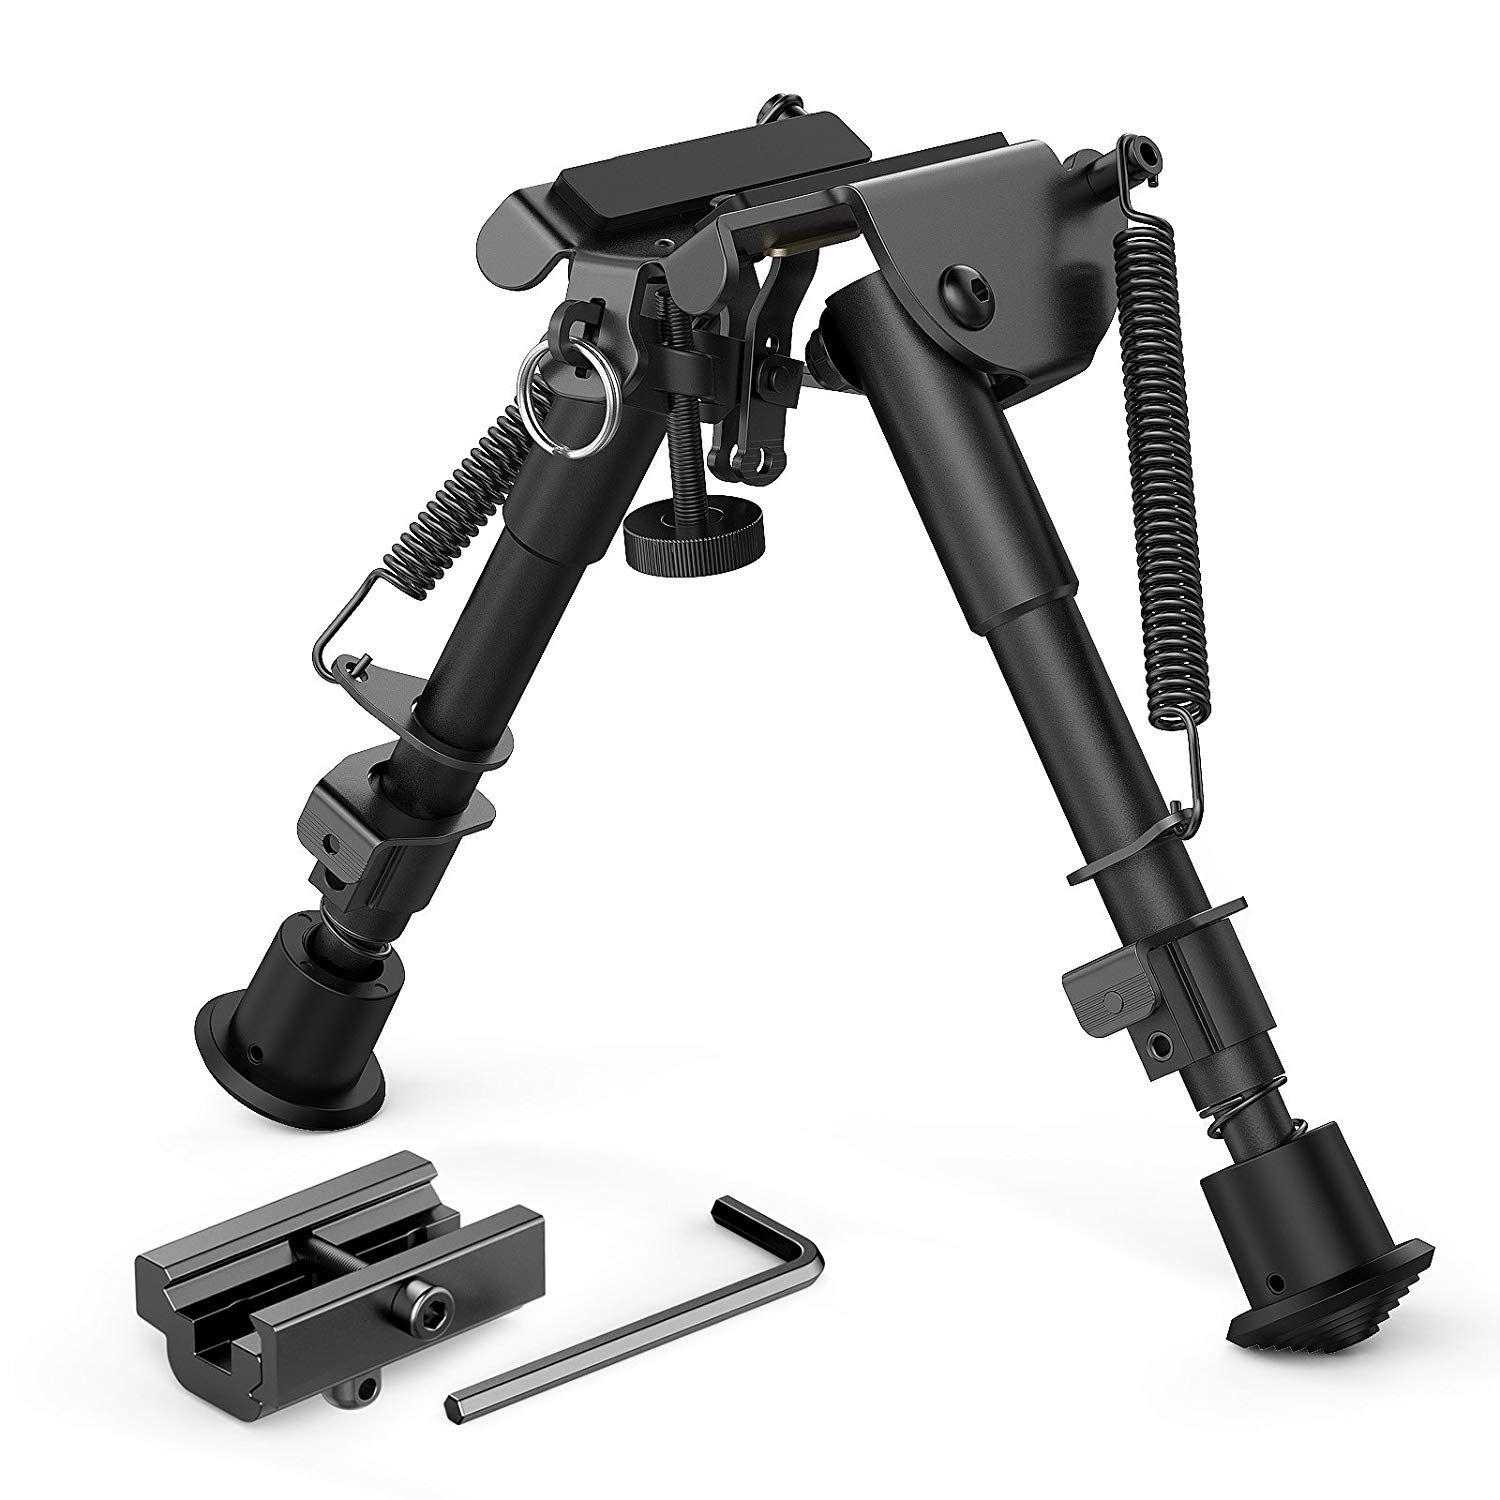 Tactical Bipod Rifle Mount Adjustable Spring Return Picatinny Hunting Sniper New 